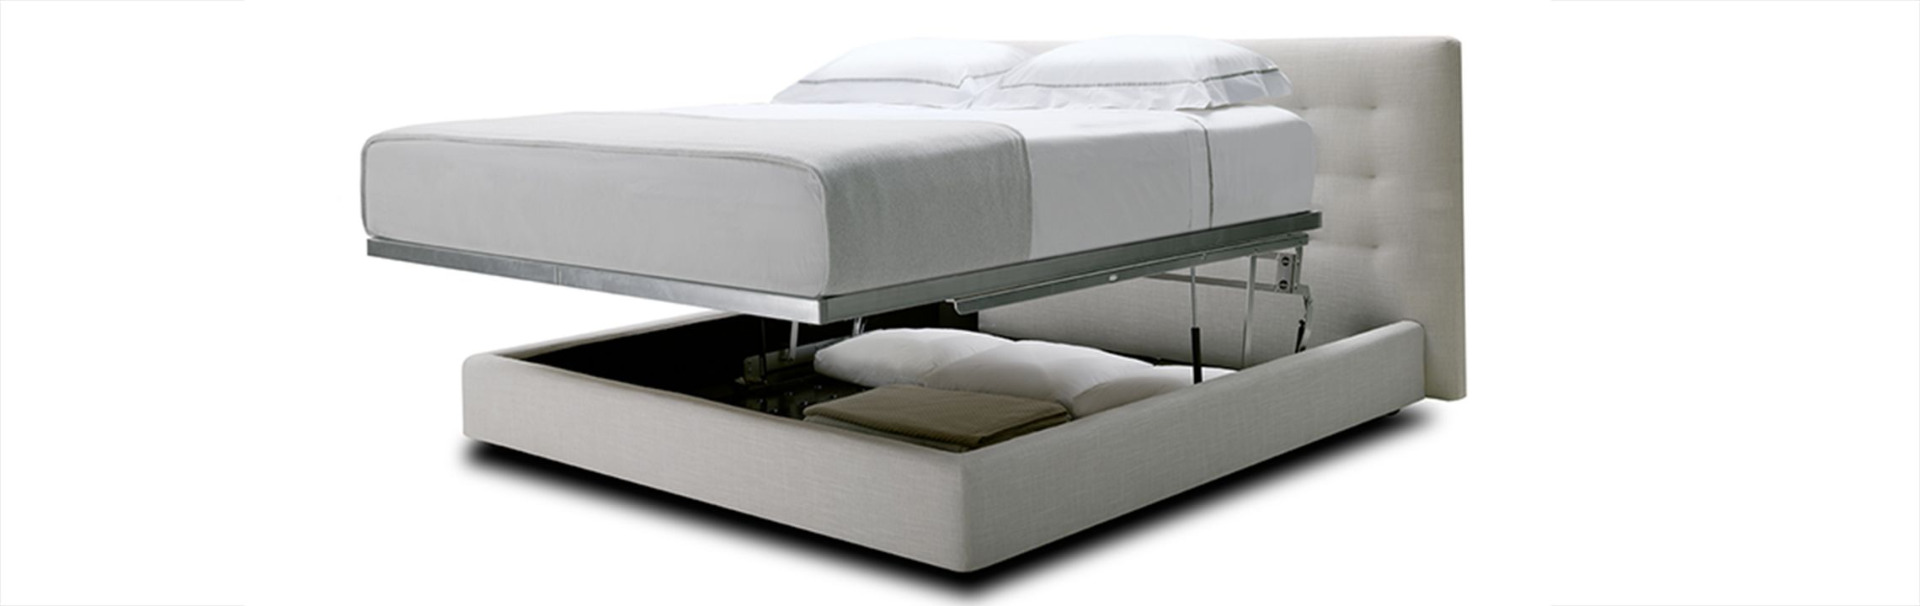 Serenade Soft Storage Bed | Storage Bed | King Size Bed ...